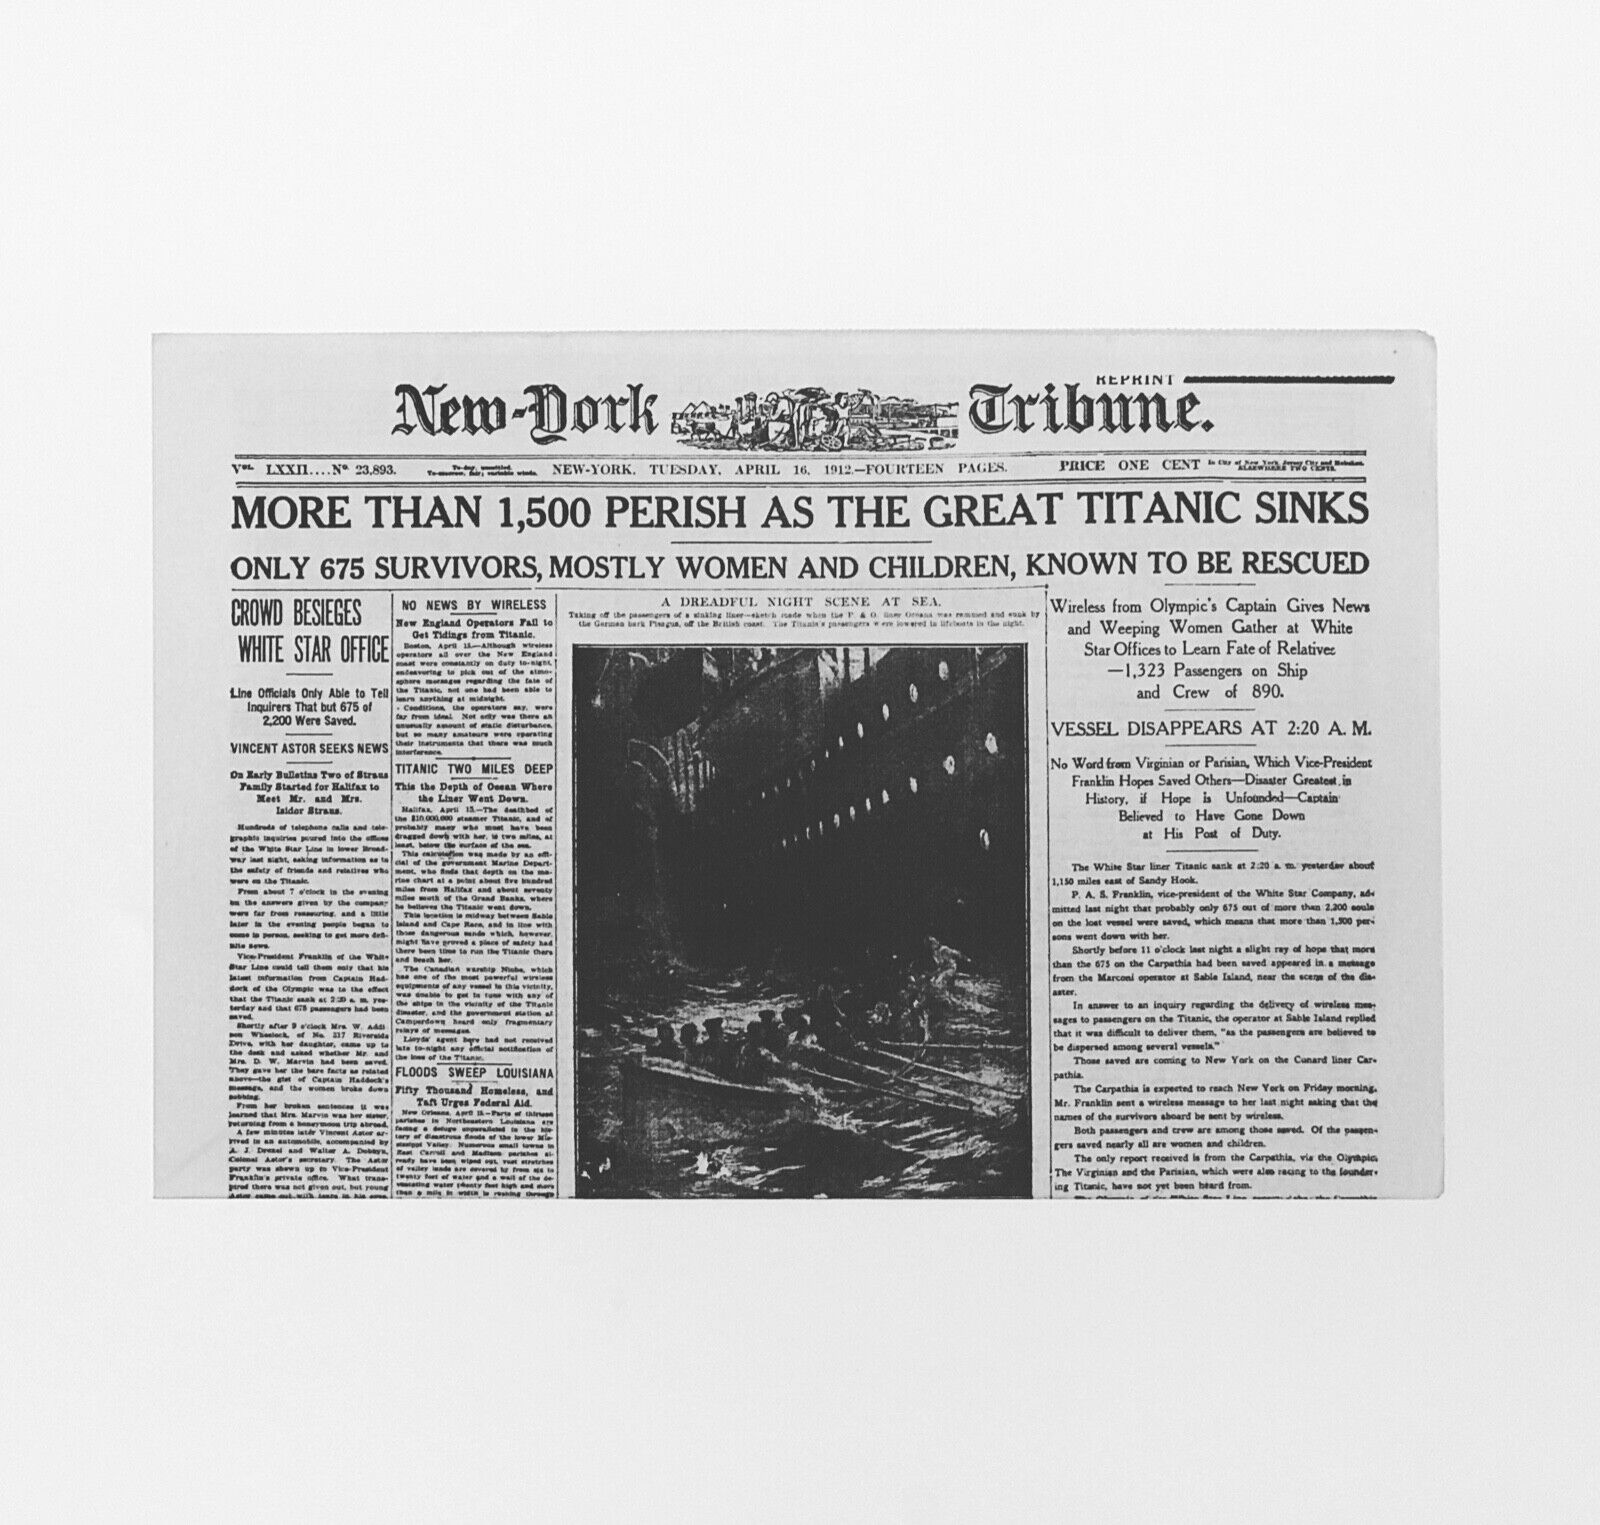 NEWSPAPER REPRINT - Titanic: More Than 1,500 Perish as the Great Titanic Sinks